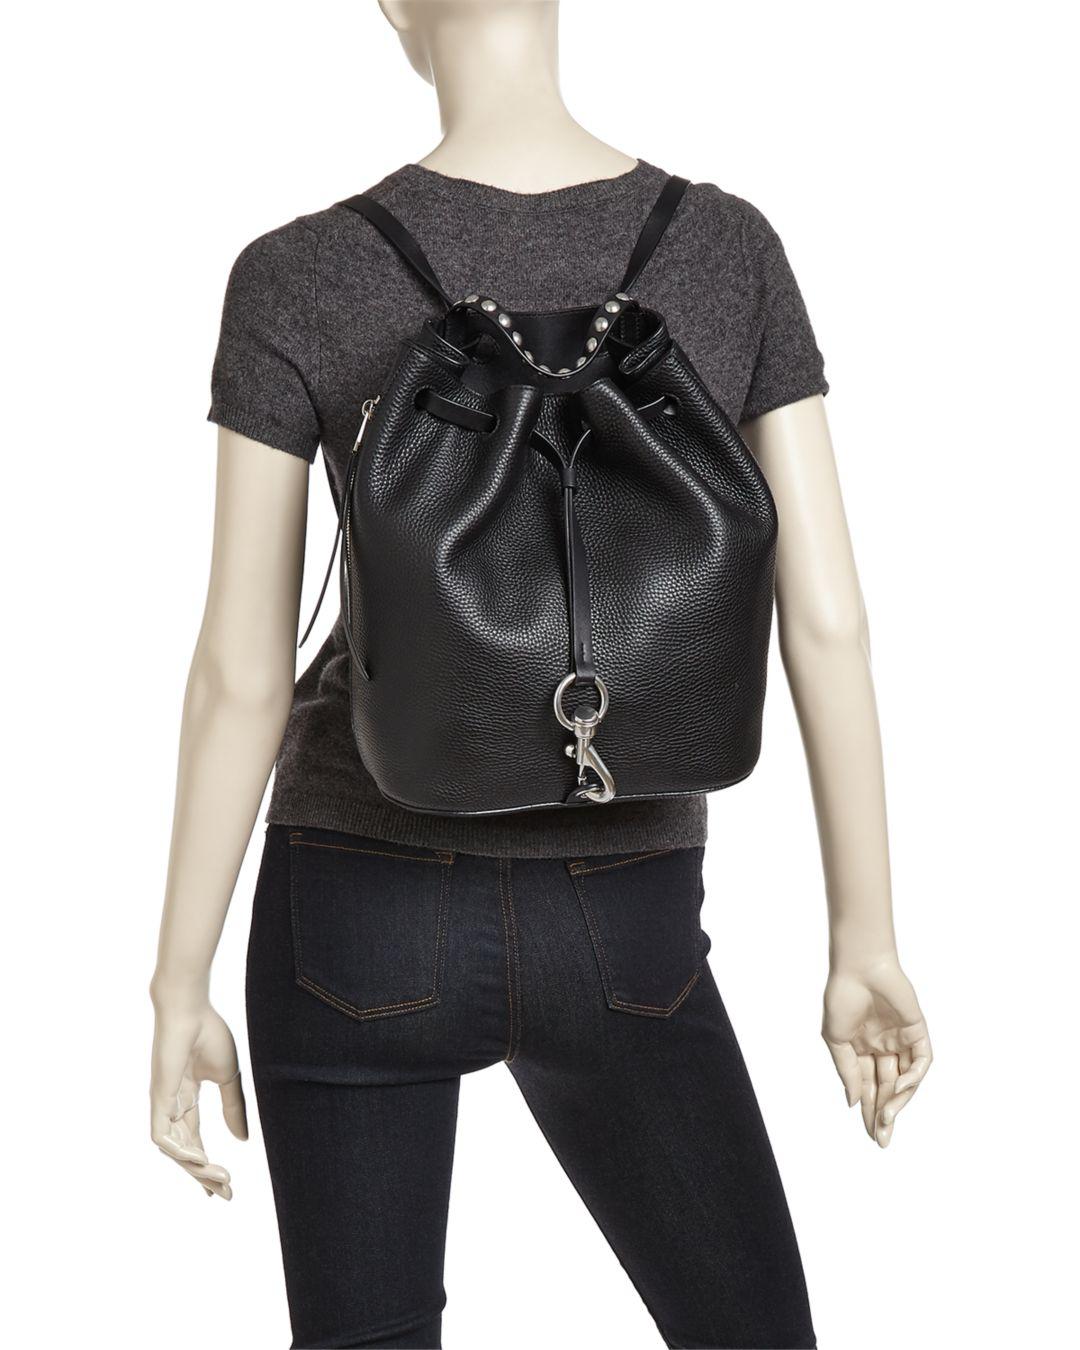 Rebecca Minkoff Leather Blythe Backpack in Black/Silver (Black) | Lyst